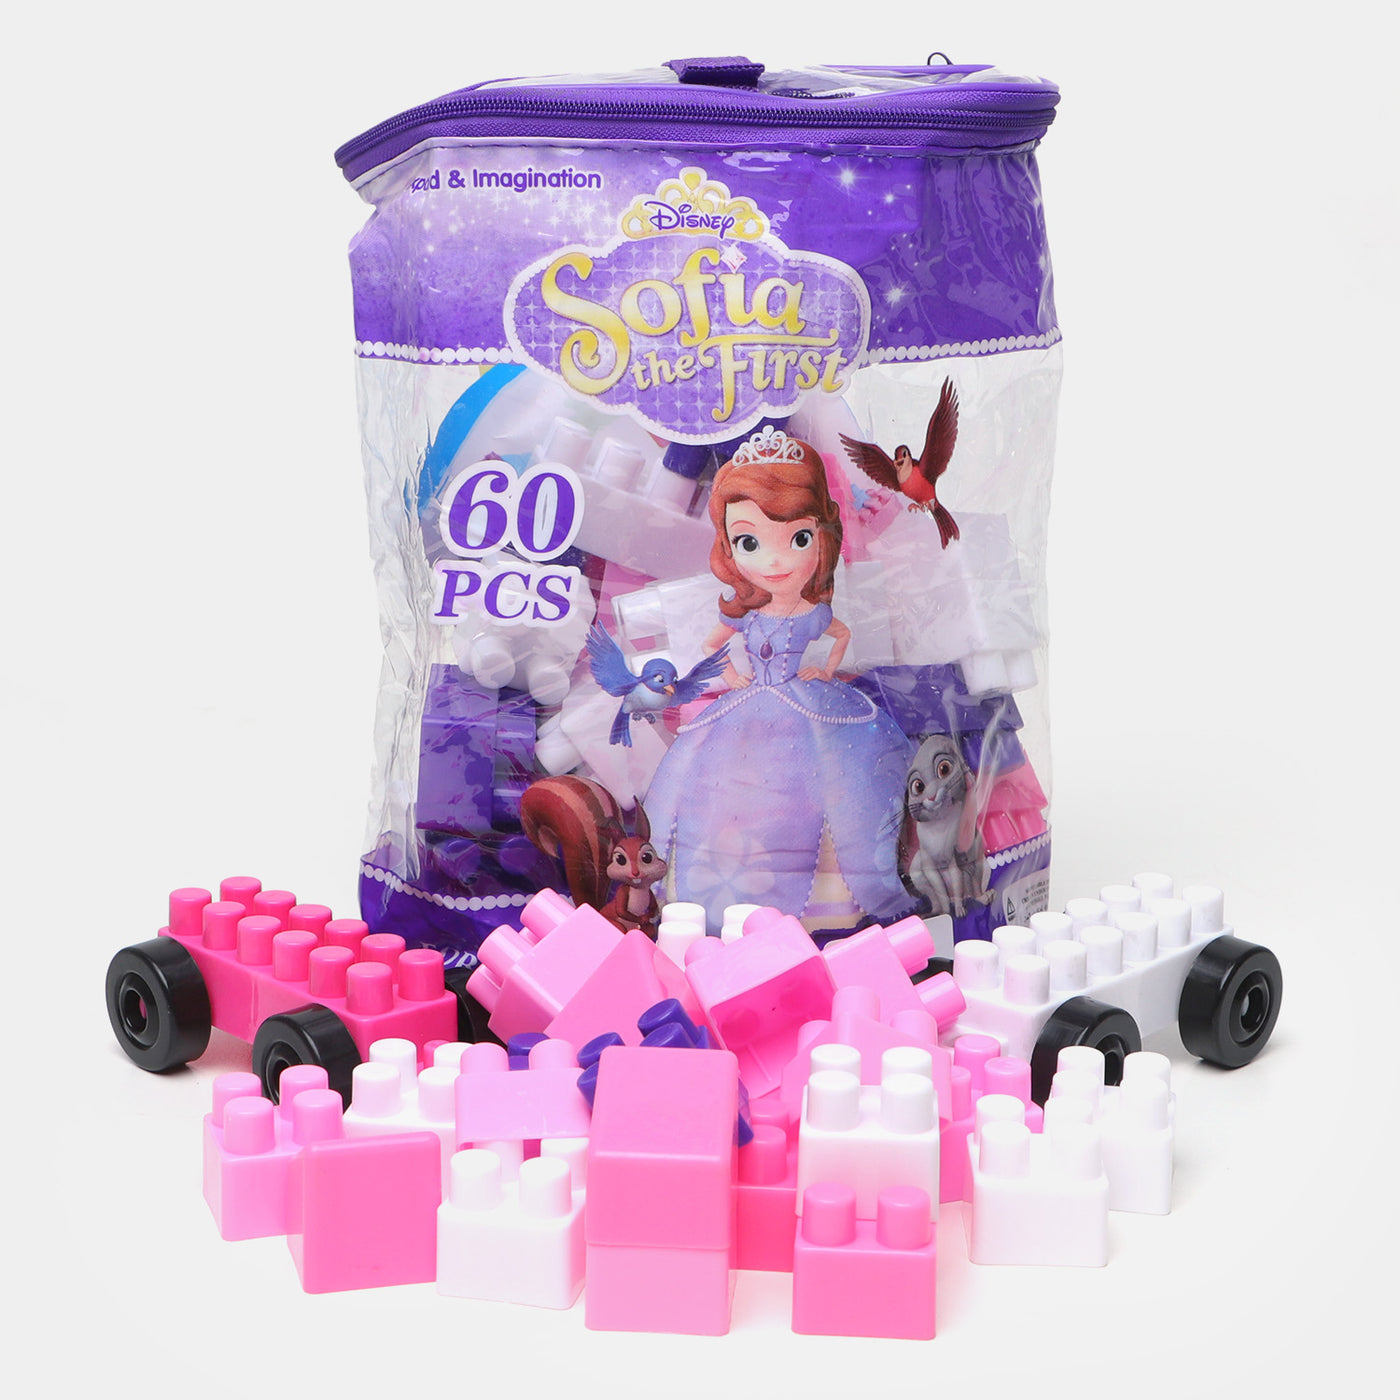 Block Set Toy For Kids | 60PCs